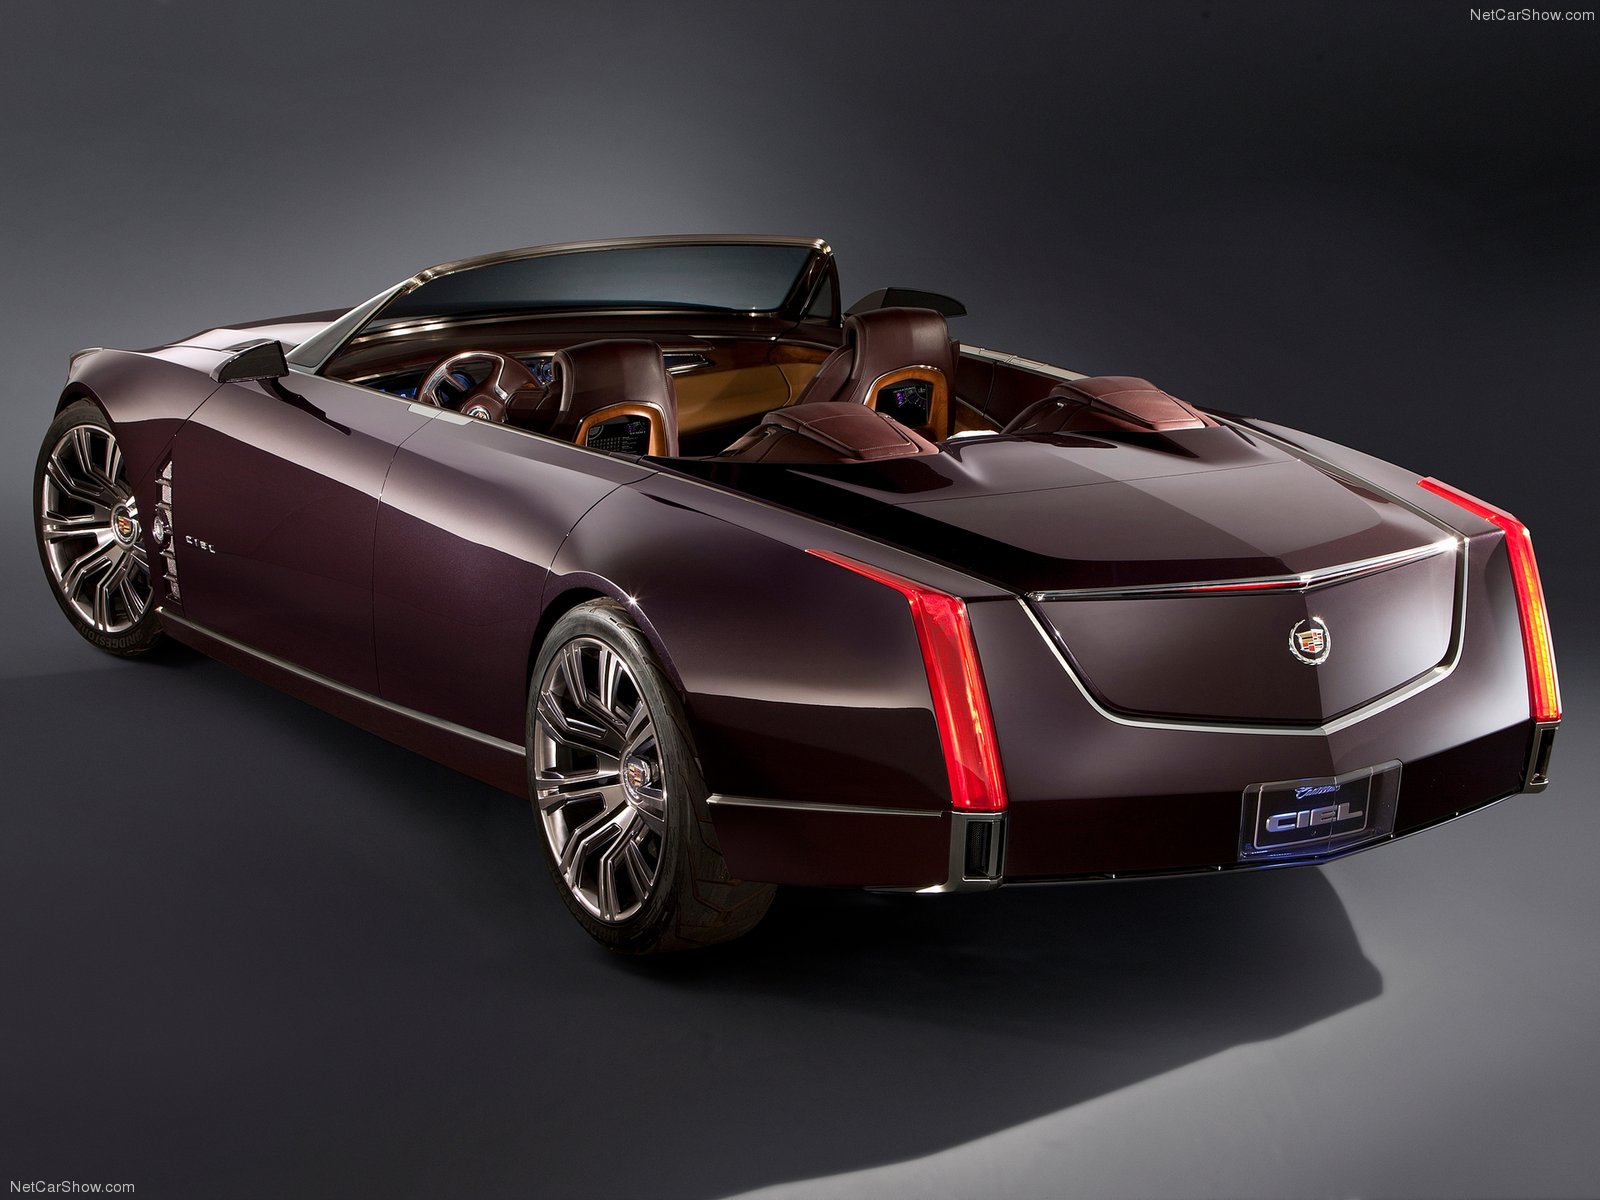 2011 Cadillac Ciel Concept